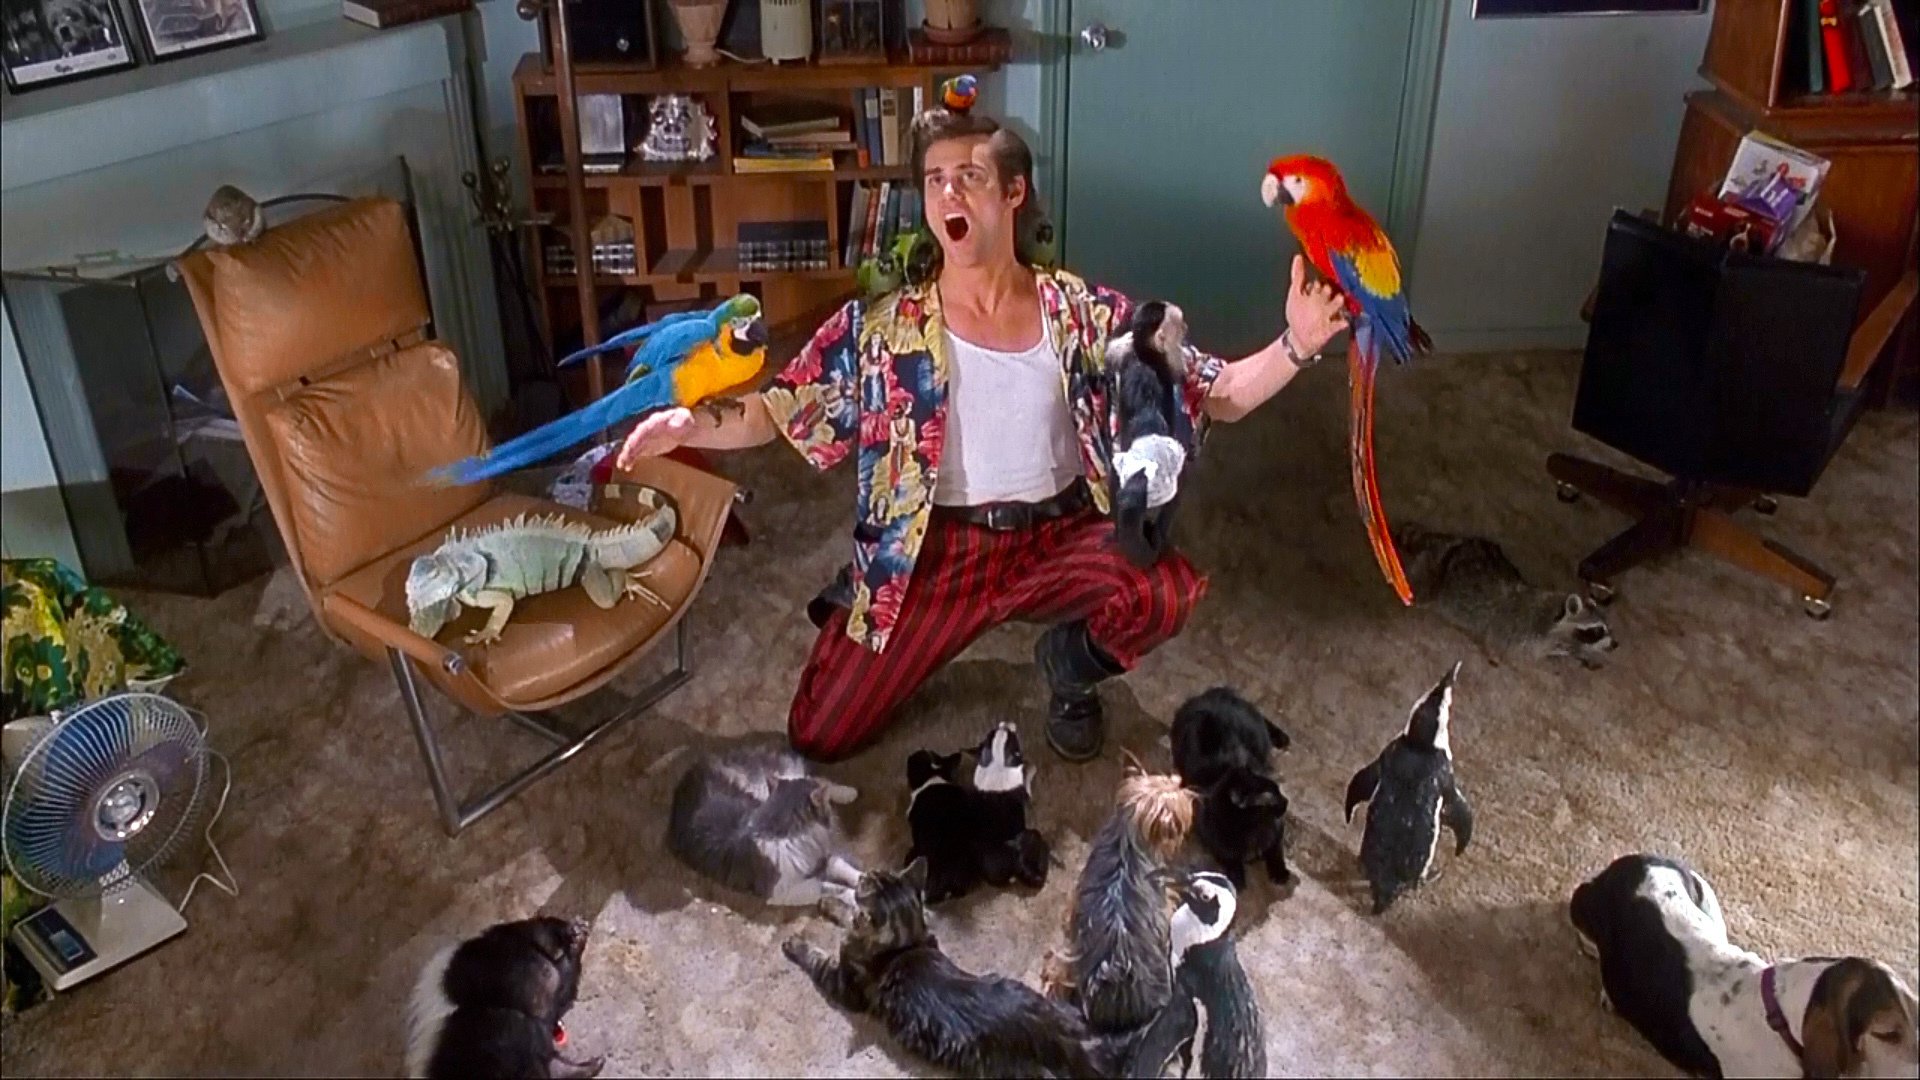 Movie Ace Ventura: Pet Detective HD Wallpaper | Background Image